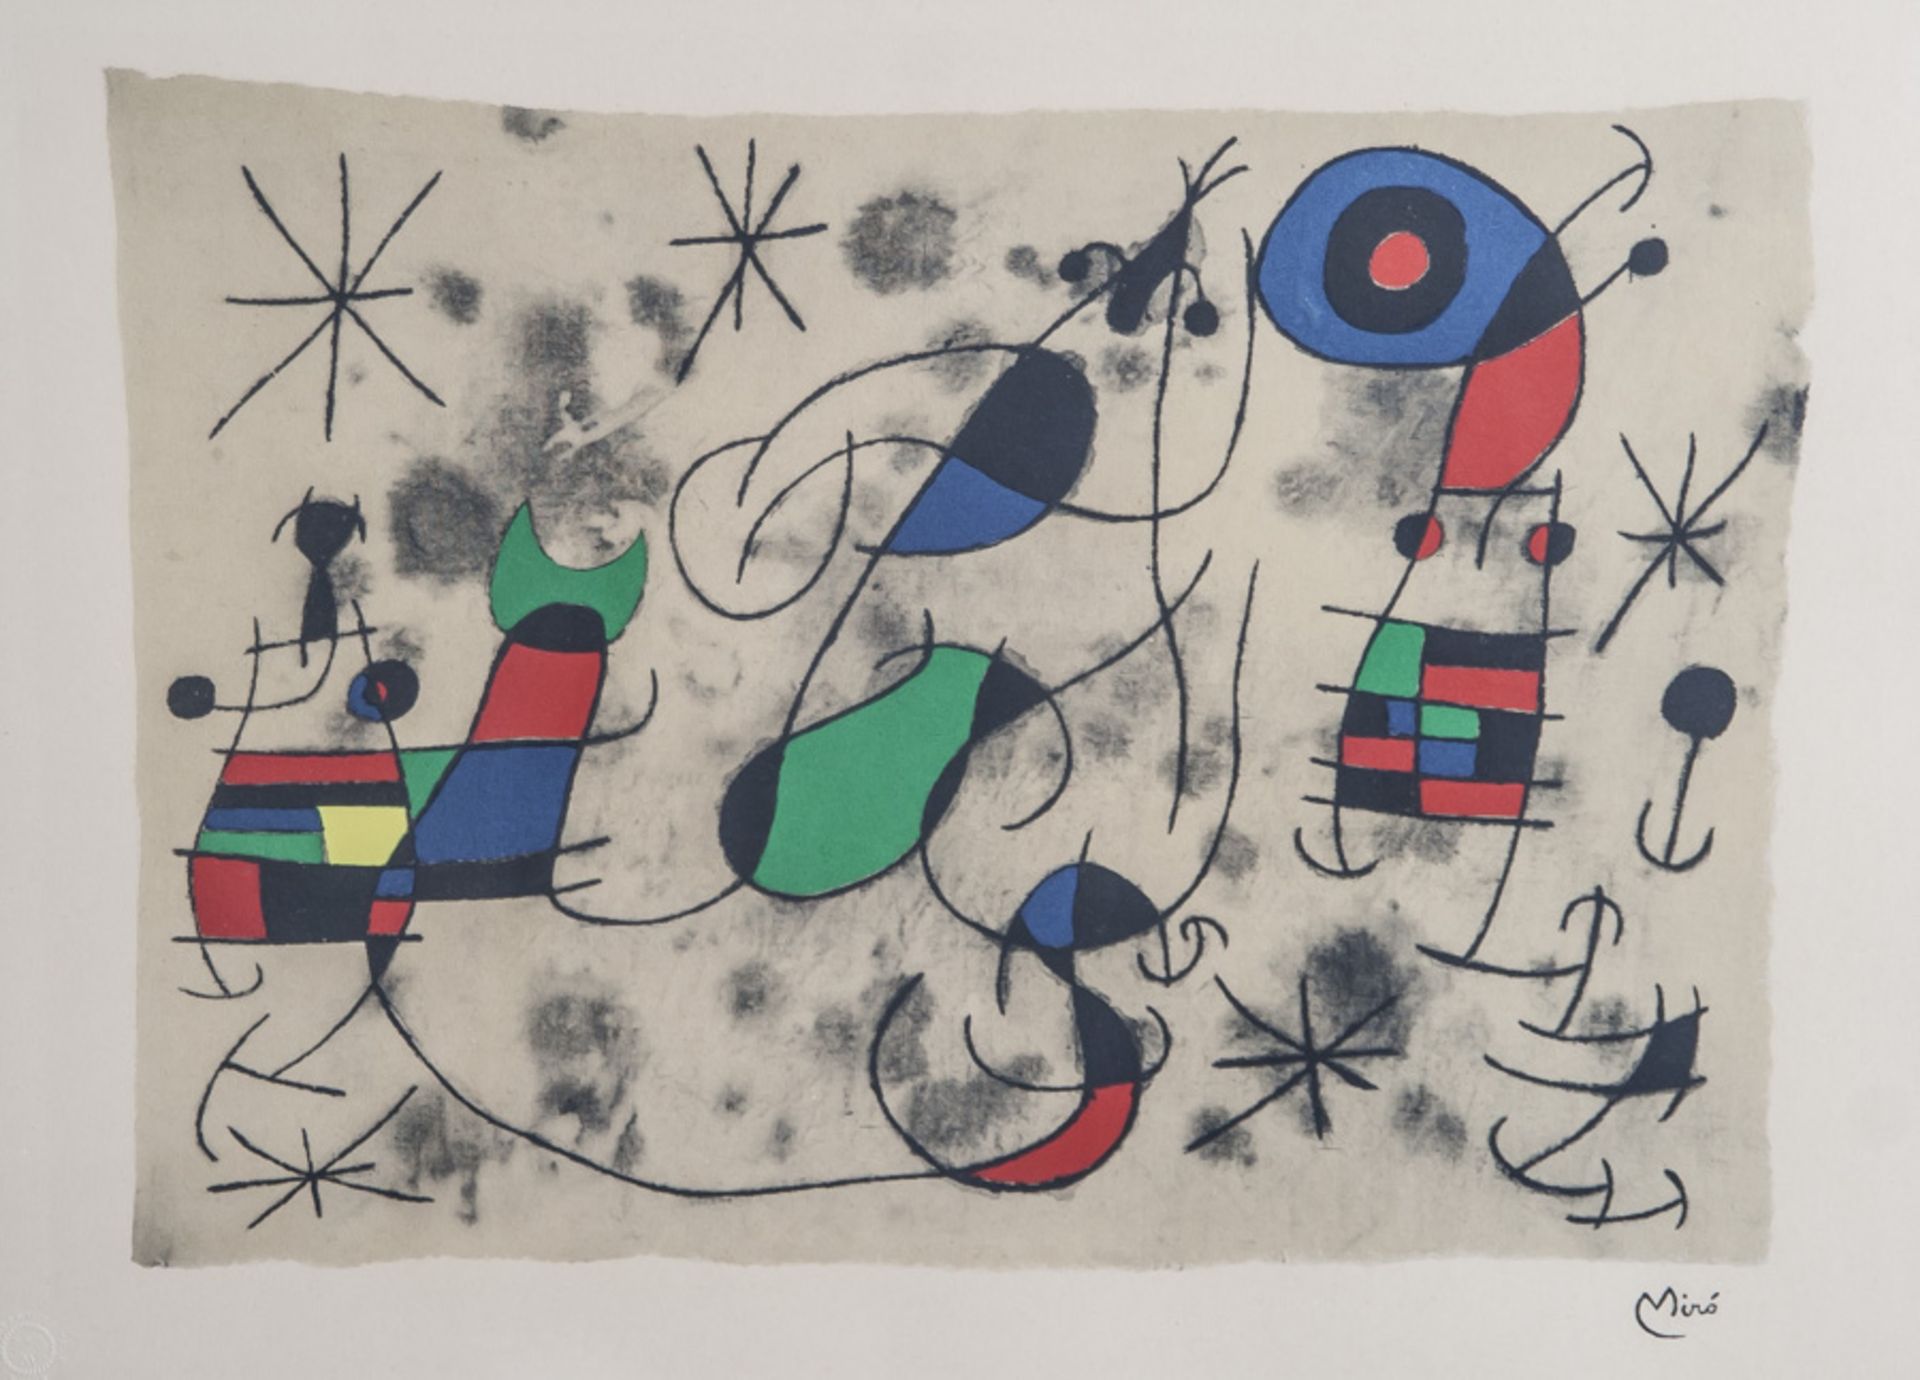 Miro, Farbseriegraphie (Galerie Maeght), in der Platte sign. Happening 1967, 40x 56 cm